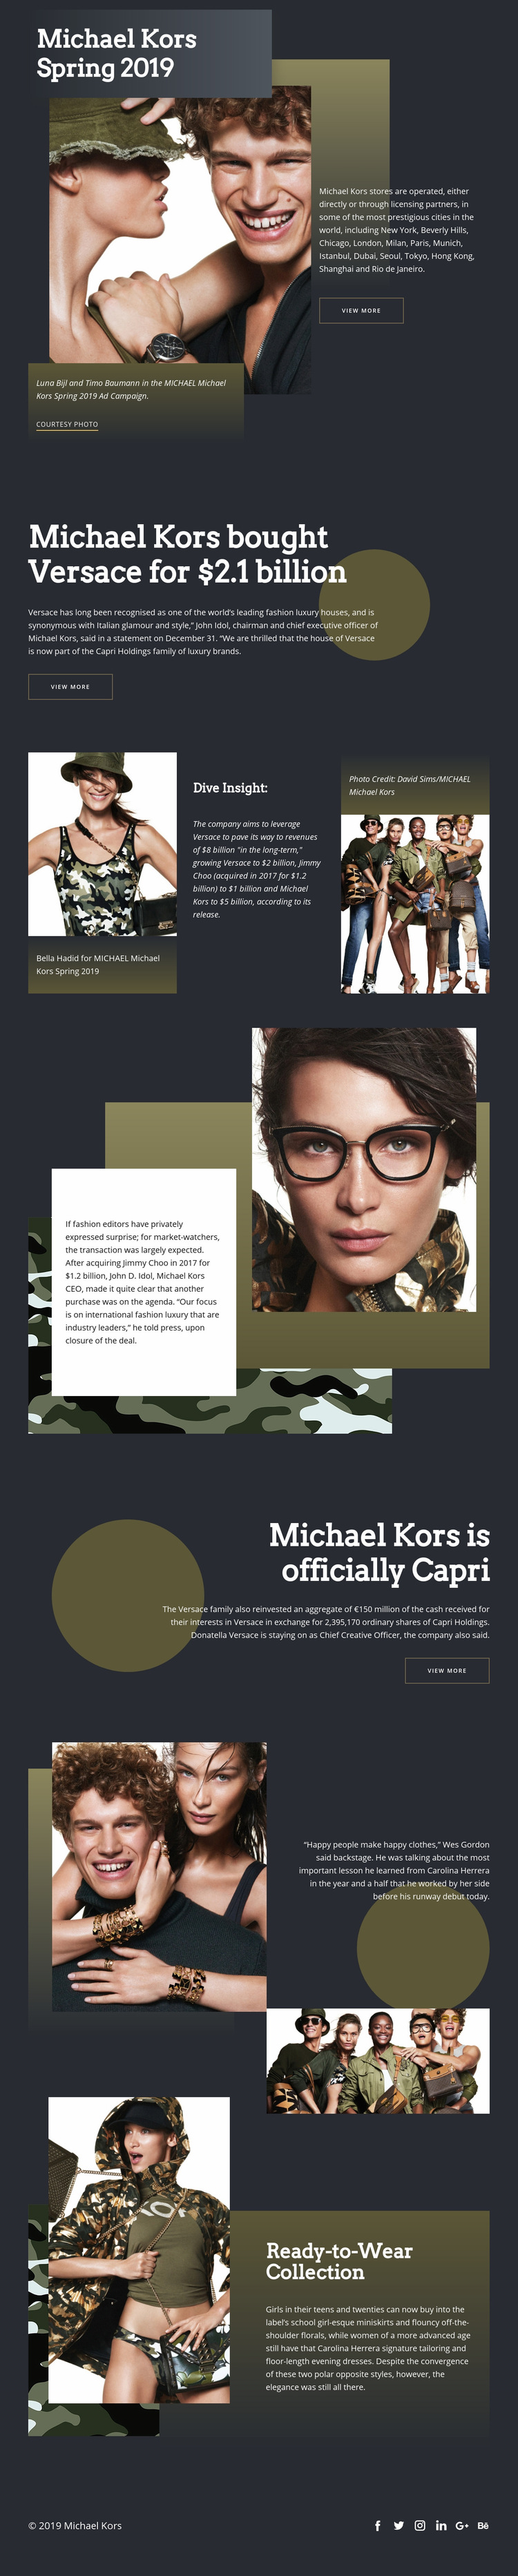 Michael Kors Dark Web Page Design